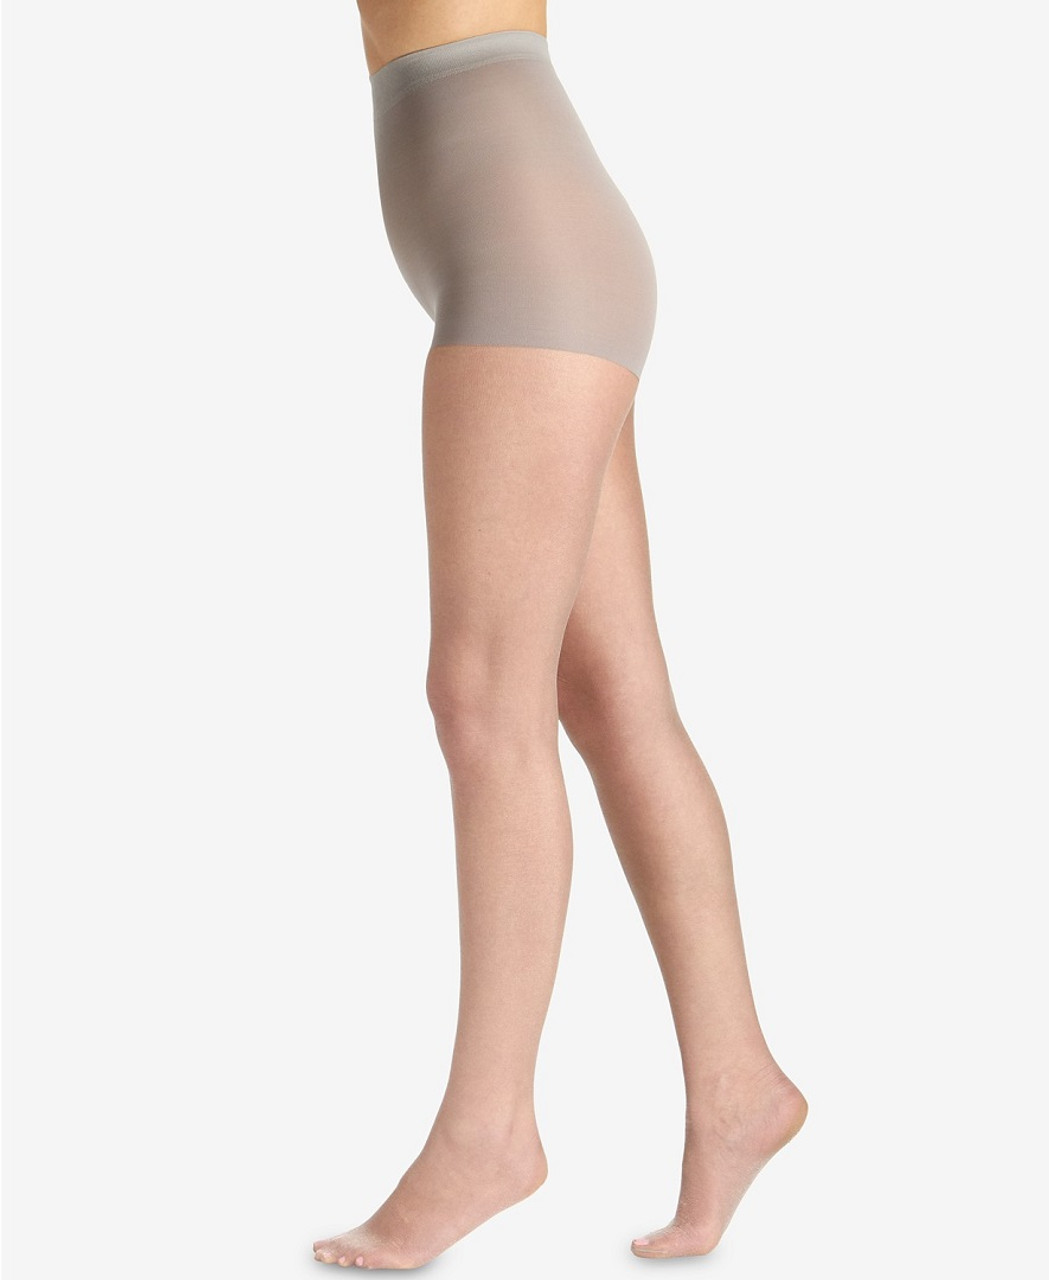 Berkshire Womens Plus-Size Queen Ultra Sheer Control Top Pantyhose -  Sandalfoot 4411 